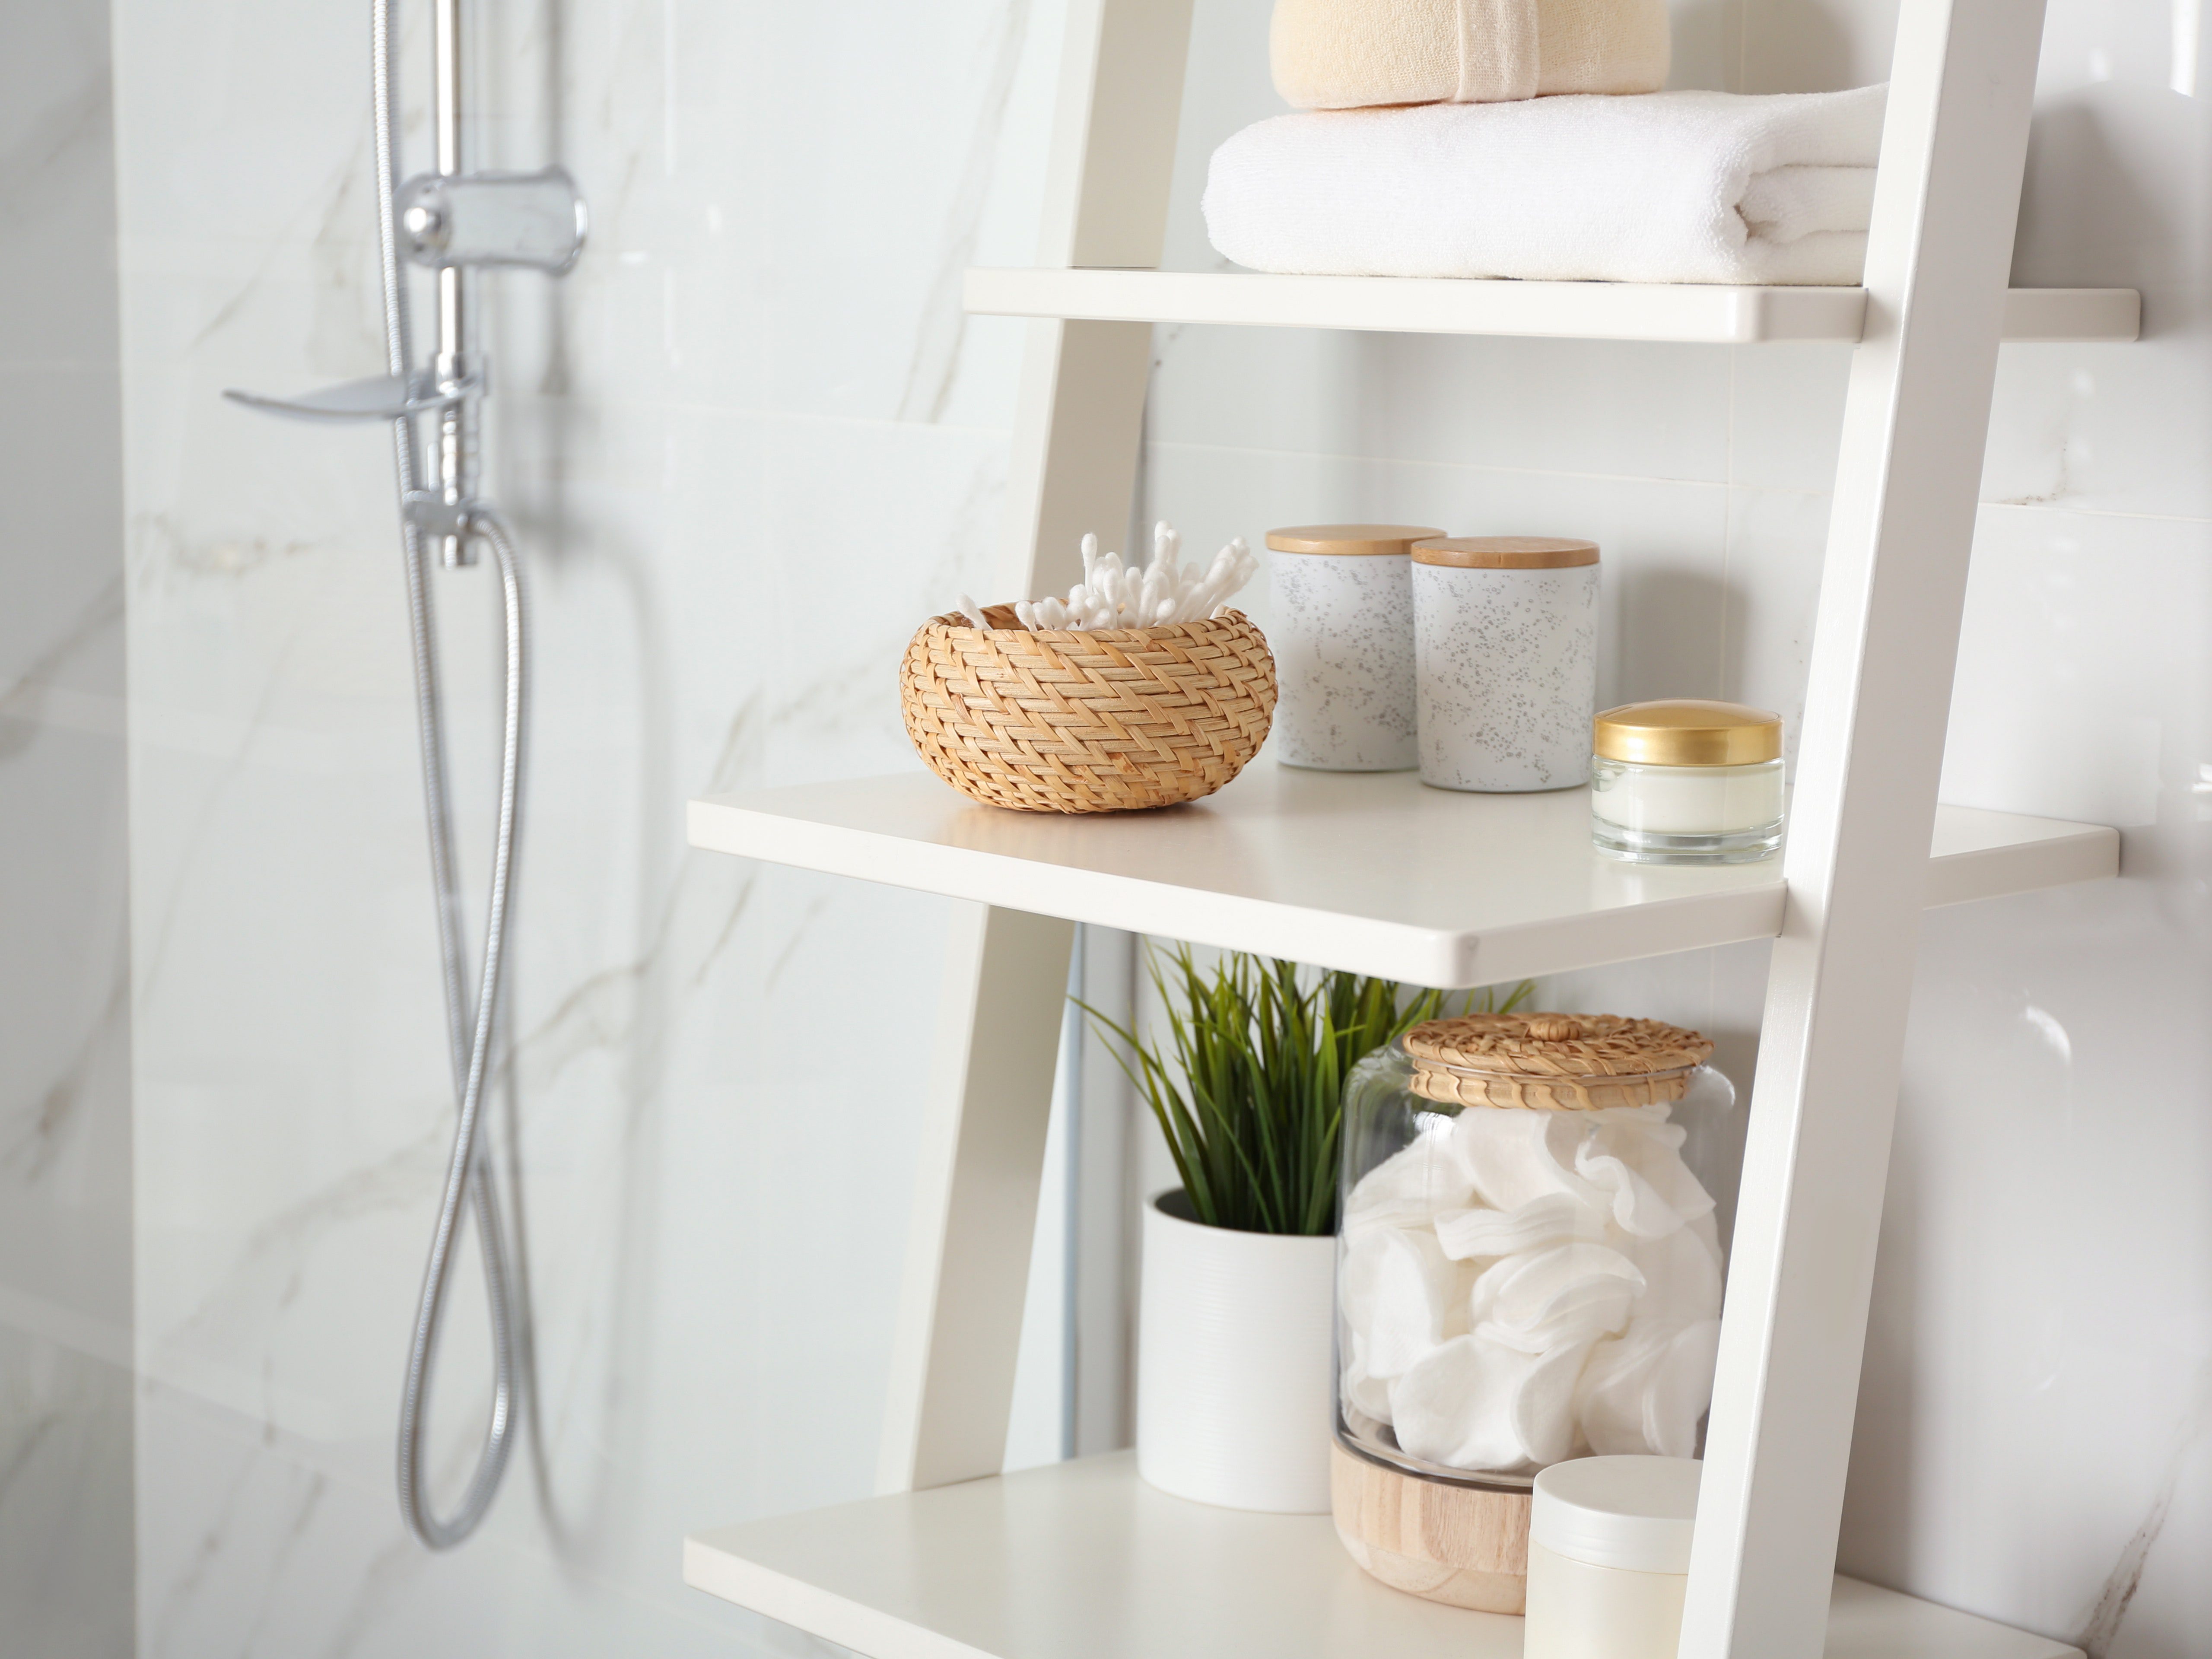 Ceramic Tile Shower Corner Shelf: Organize Your Bathroom in Style ...